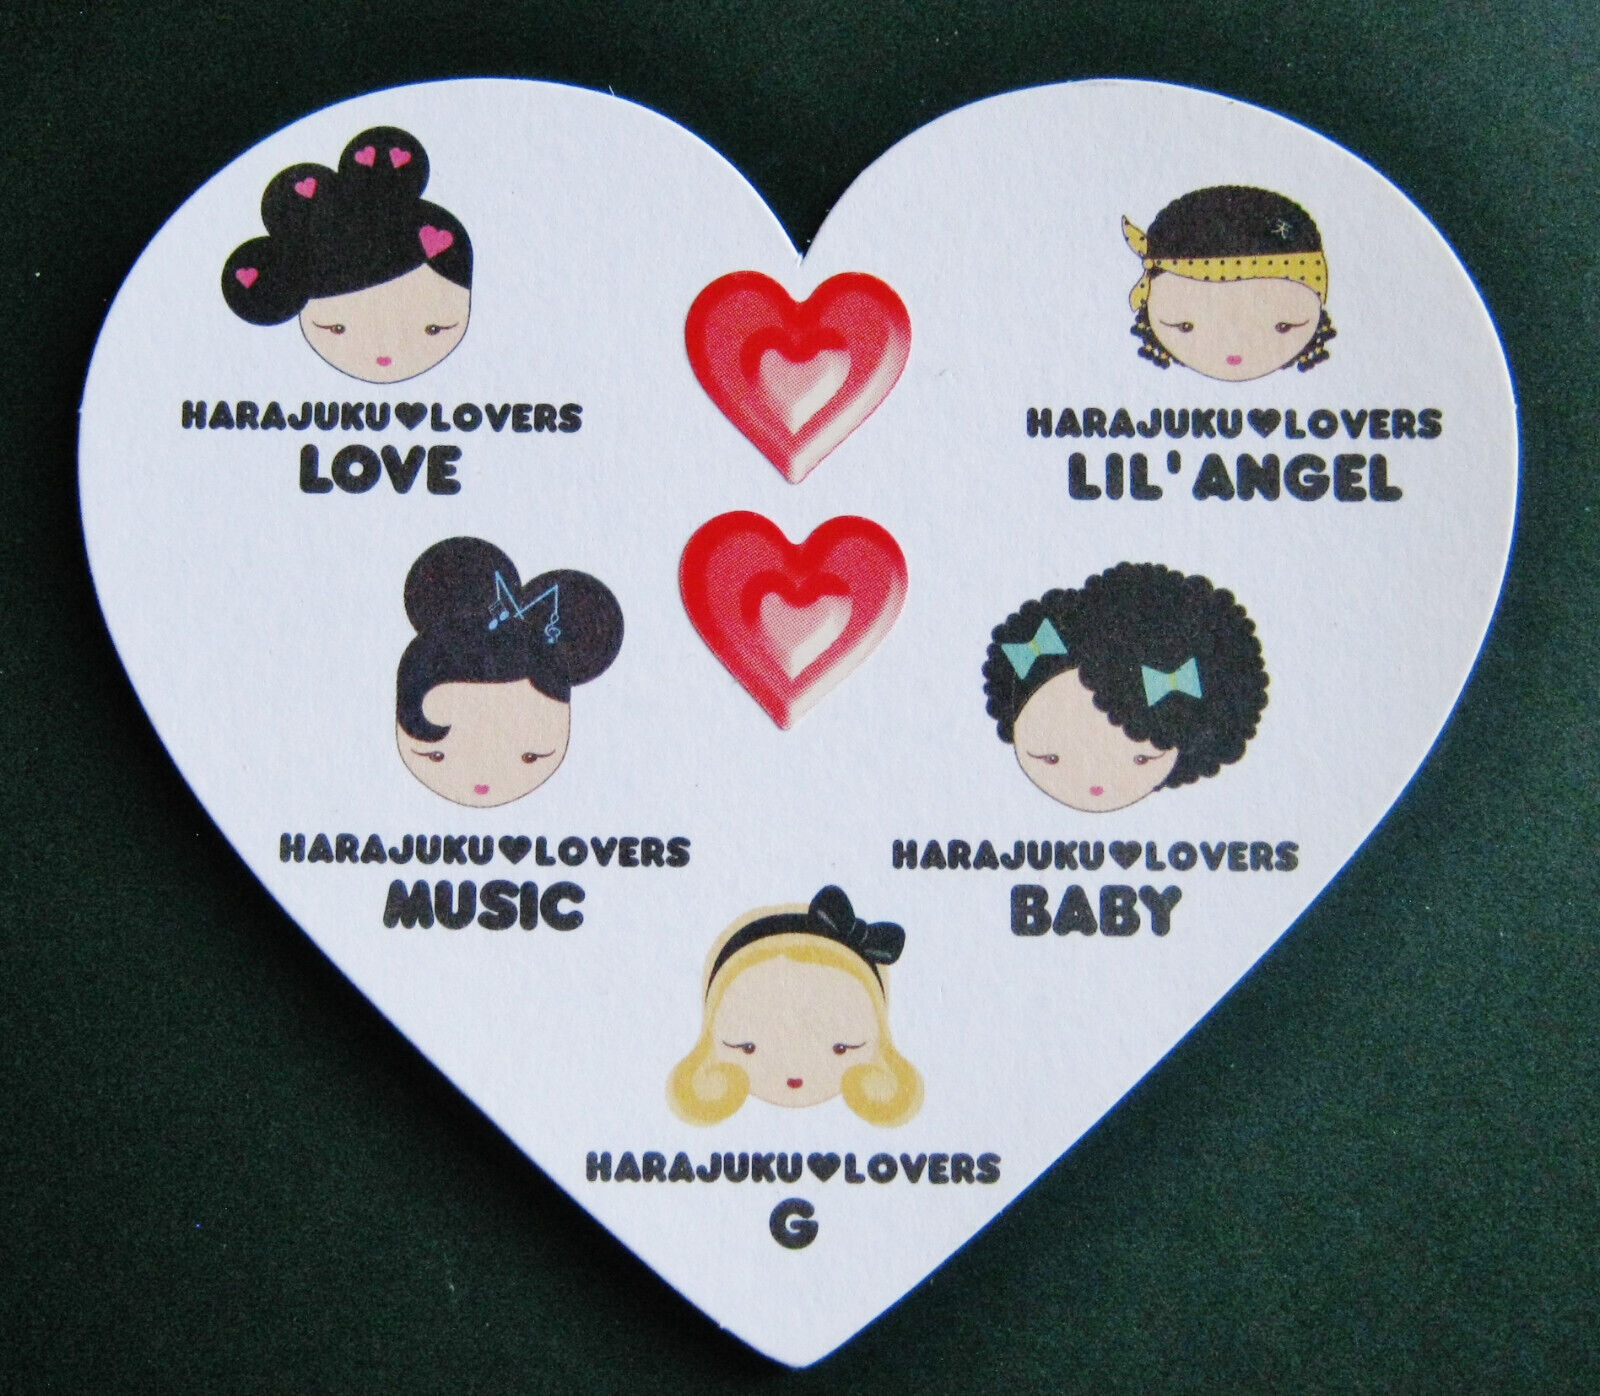 RARE HARAUKU LOVERS HEART-SHAPE PERFUME CARD, MUSIC, LIL ANGEL, G (GWEN STEFANI)